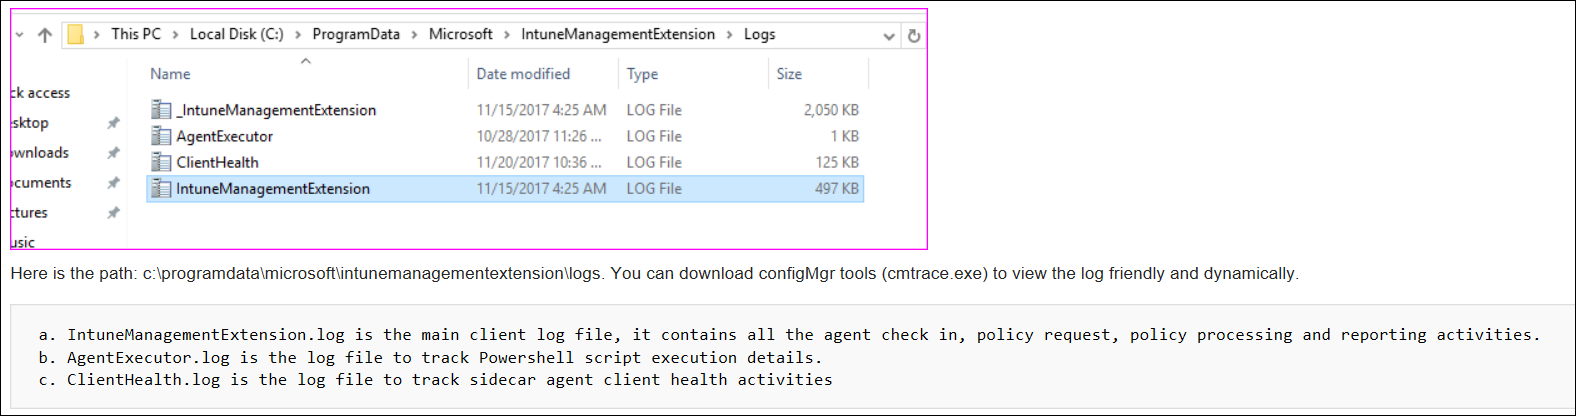 Снимок экрана или пример журналов агента cmtrace в Microsoft Intune